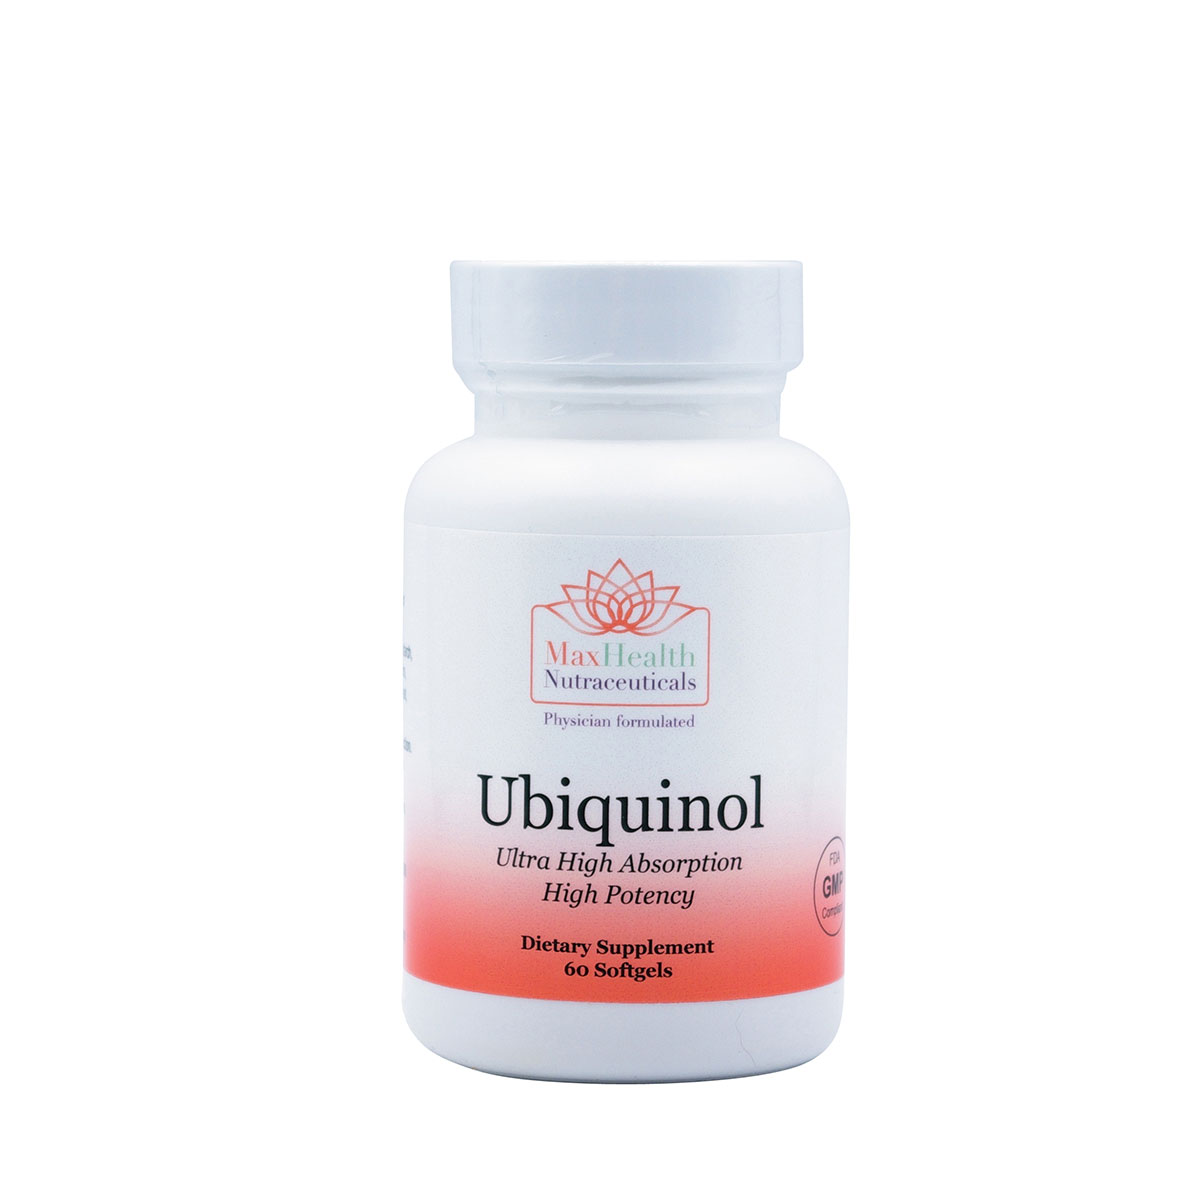 11Ultra High Absorption and High Potency Ubiquinol